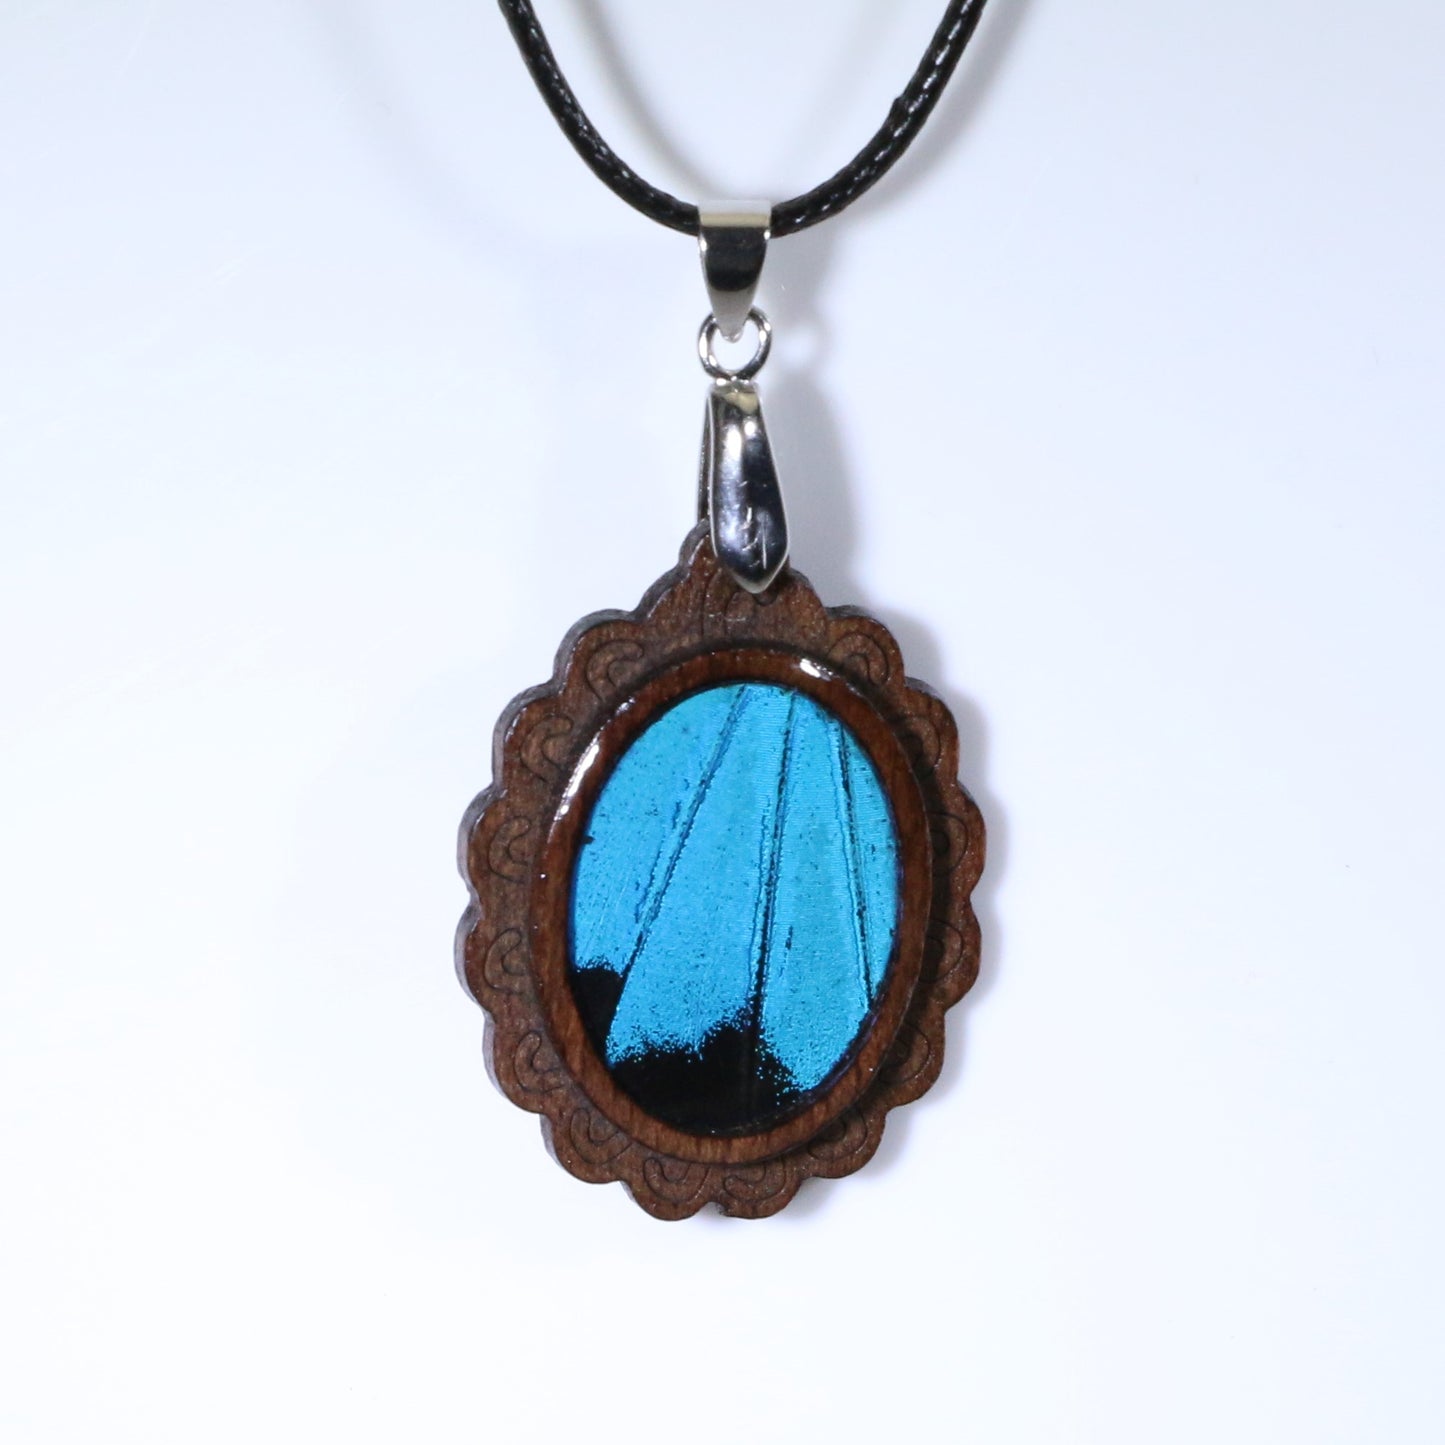 52717 - Real Butterfly Wing Jewelry - Pendant - Dark Wood - Oval - Blue Mountain Swallowtail